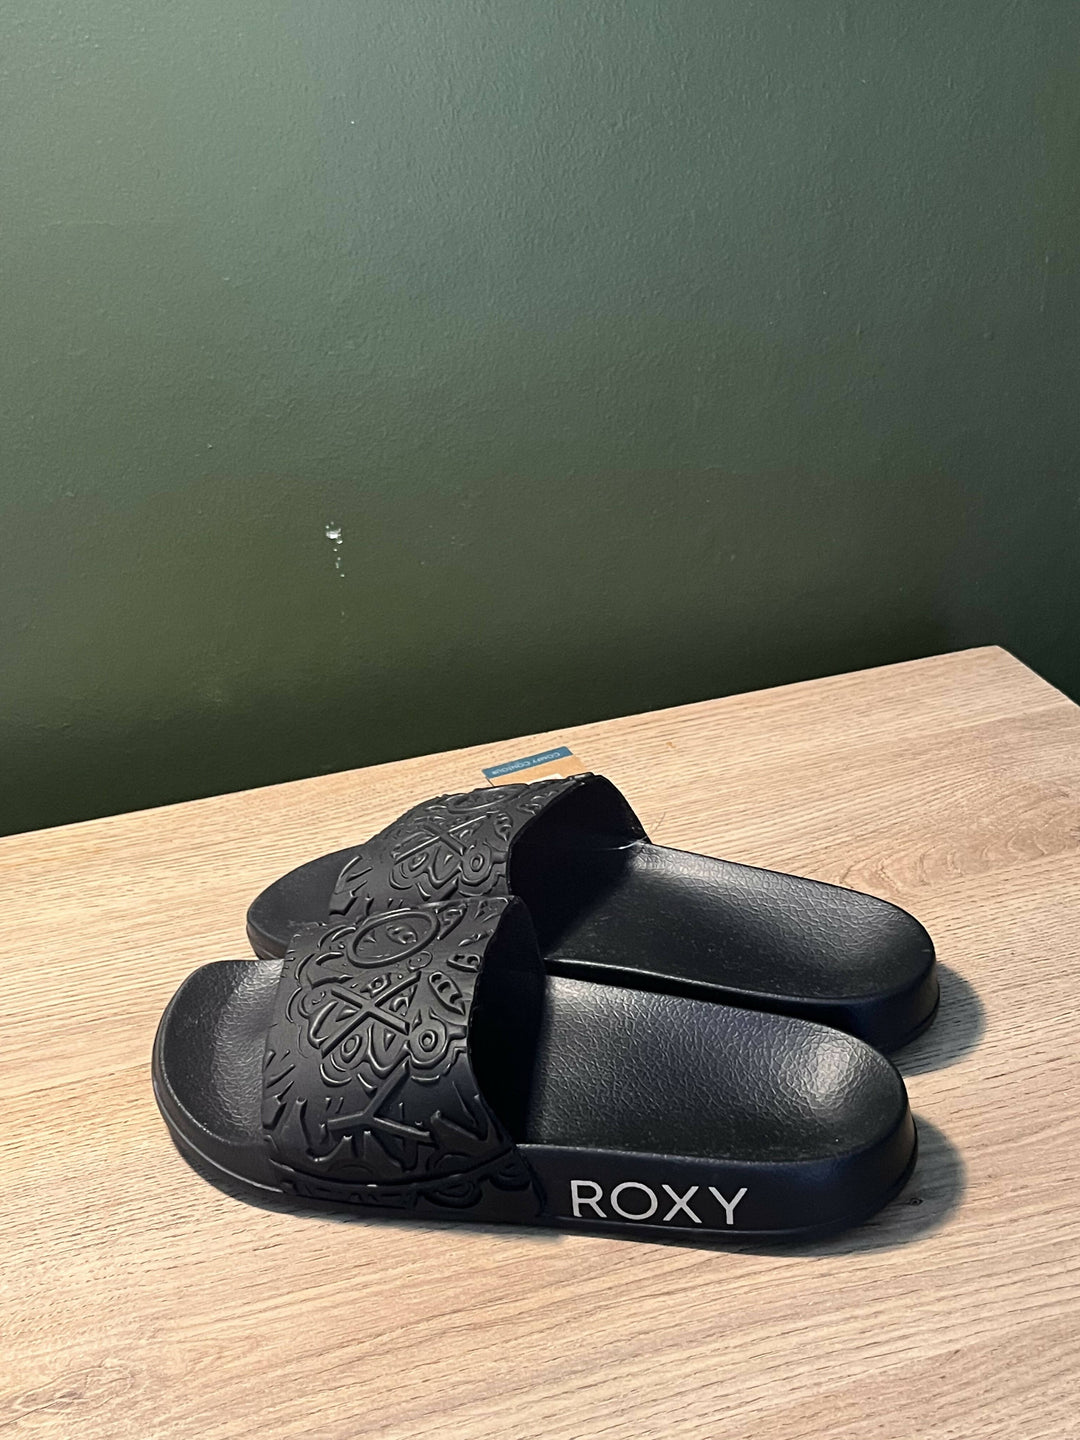 Roxy Slides